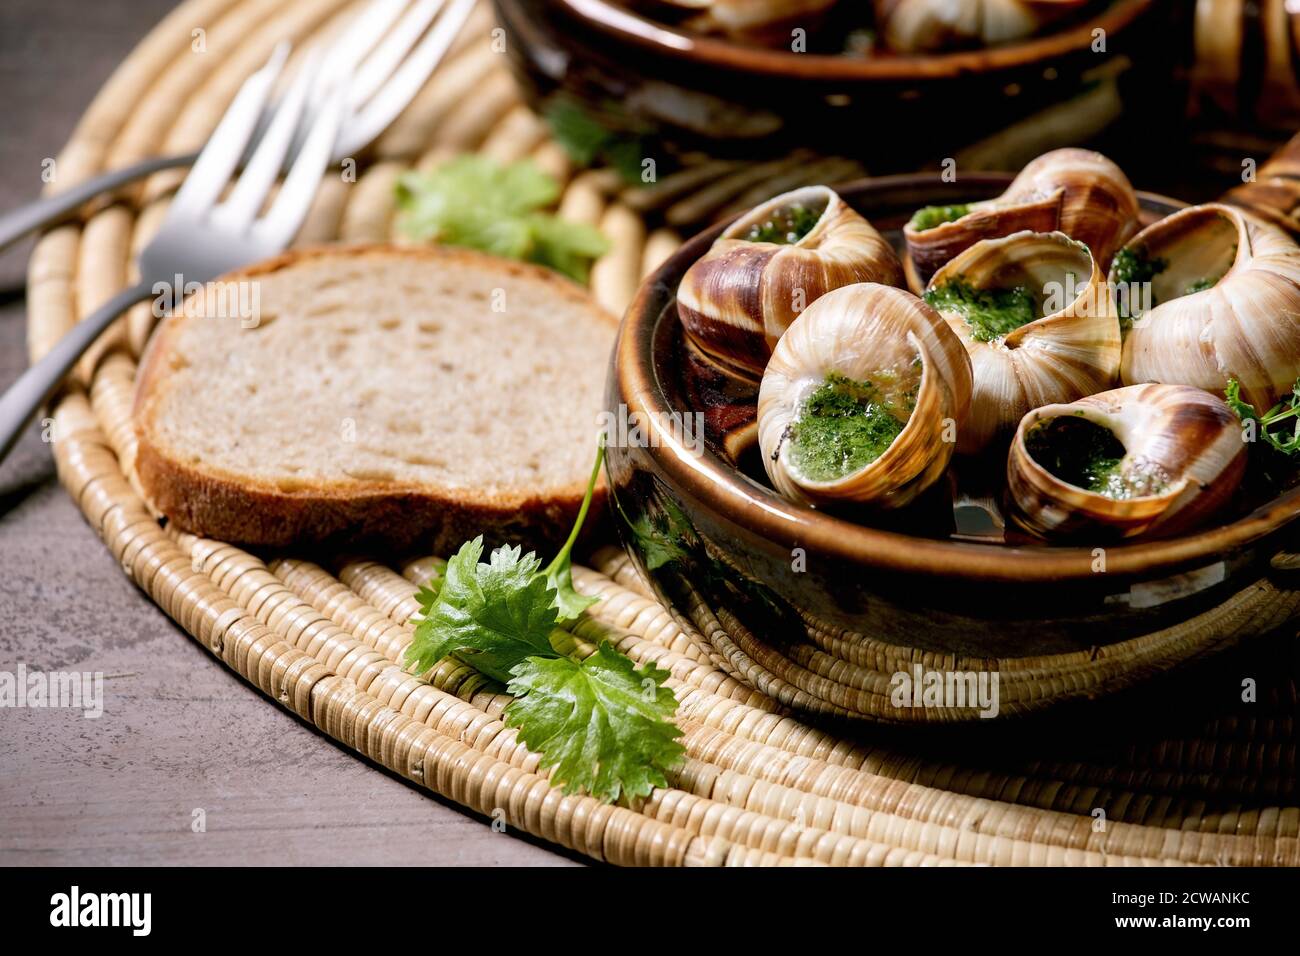 Escargots de bourgogne hi-res stock photography and images - Alamy